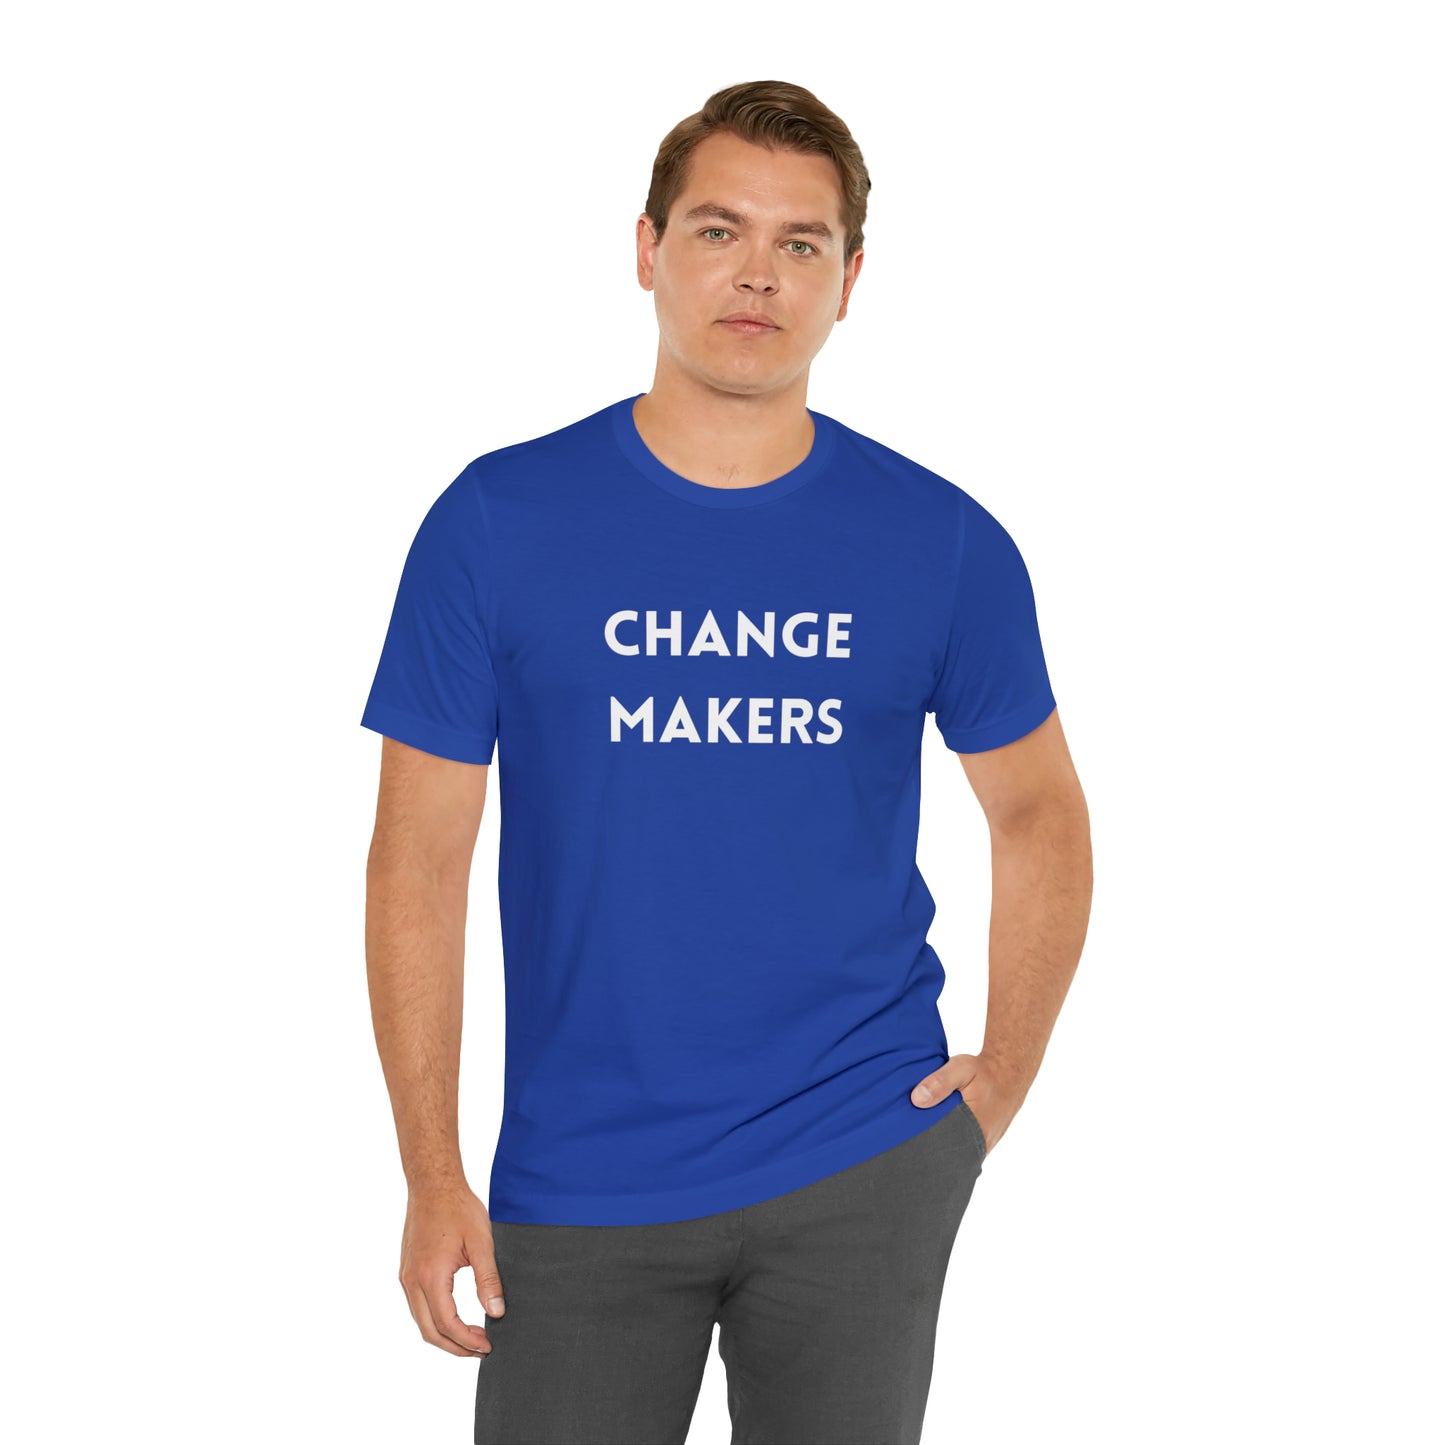 Inspirational T-Shirt About Change | For Change Maker T-Shirt Petrova Designs